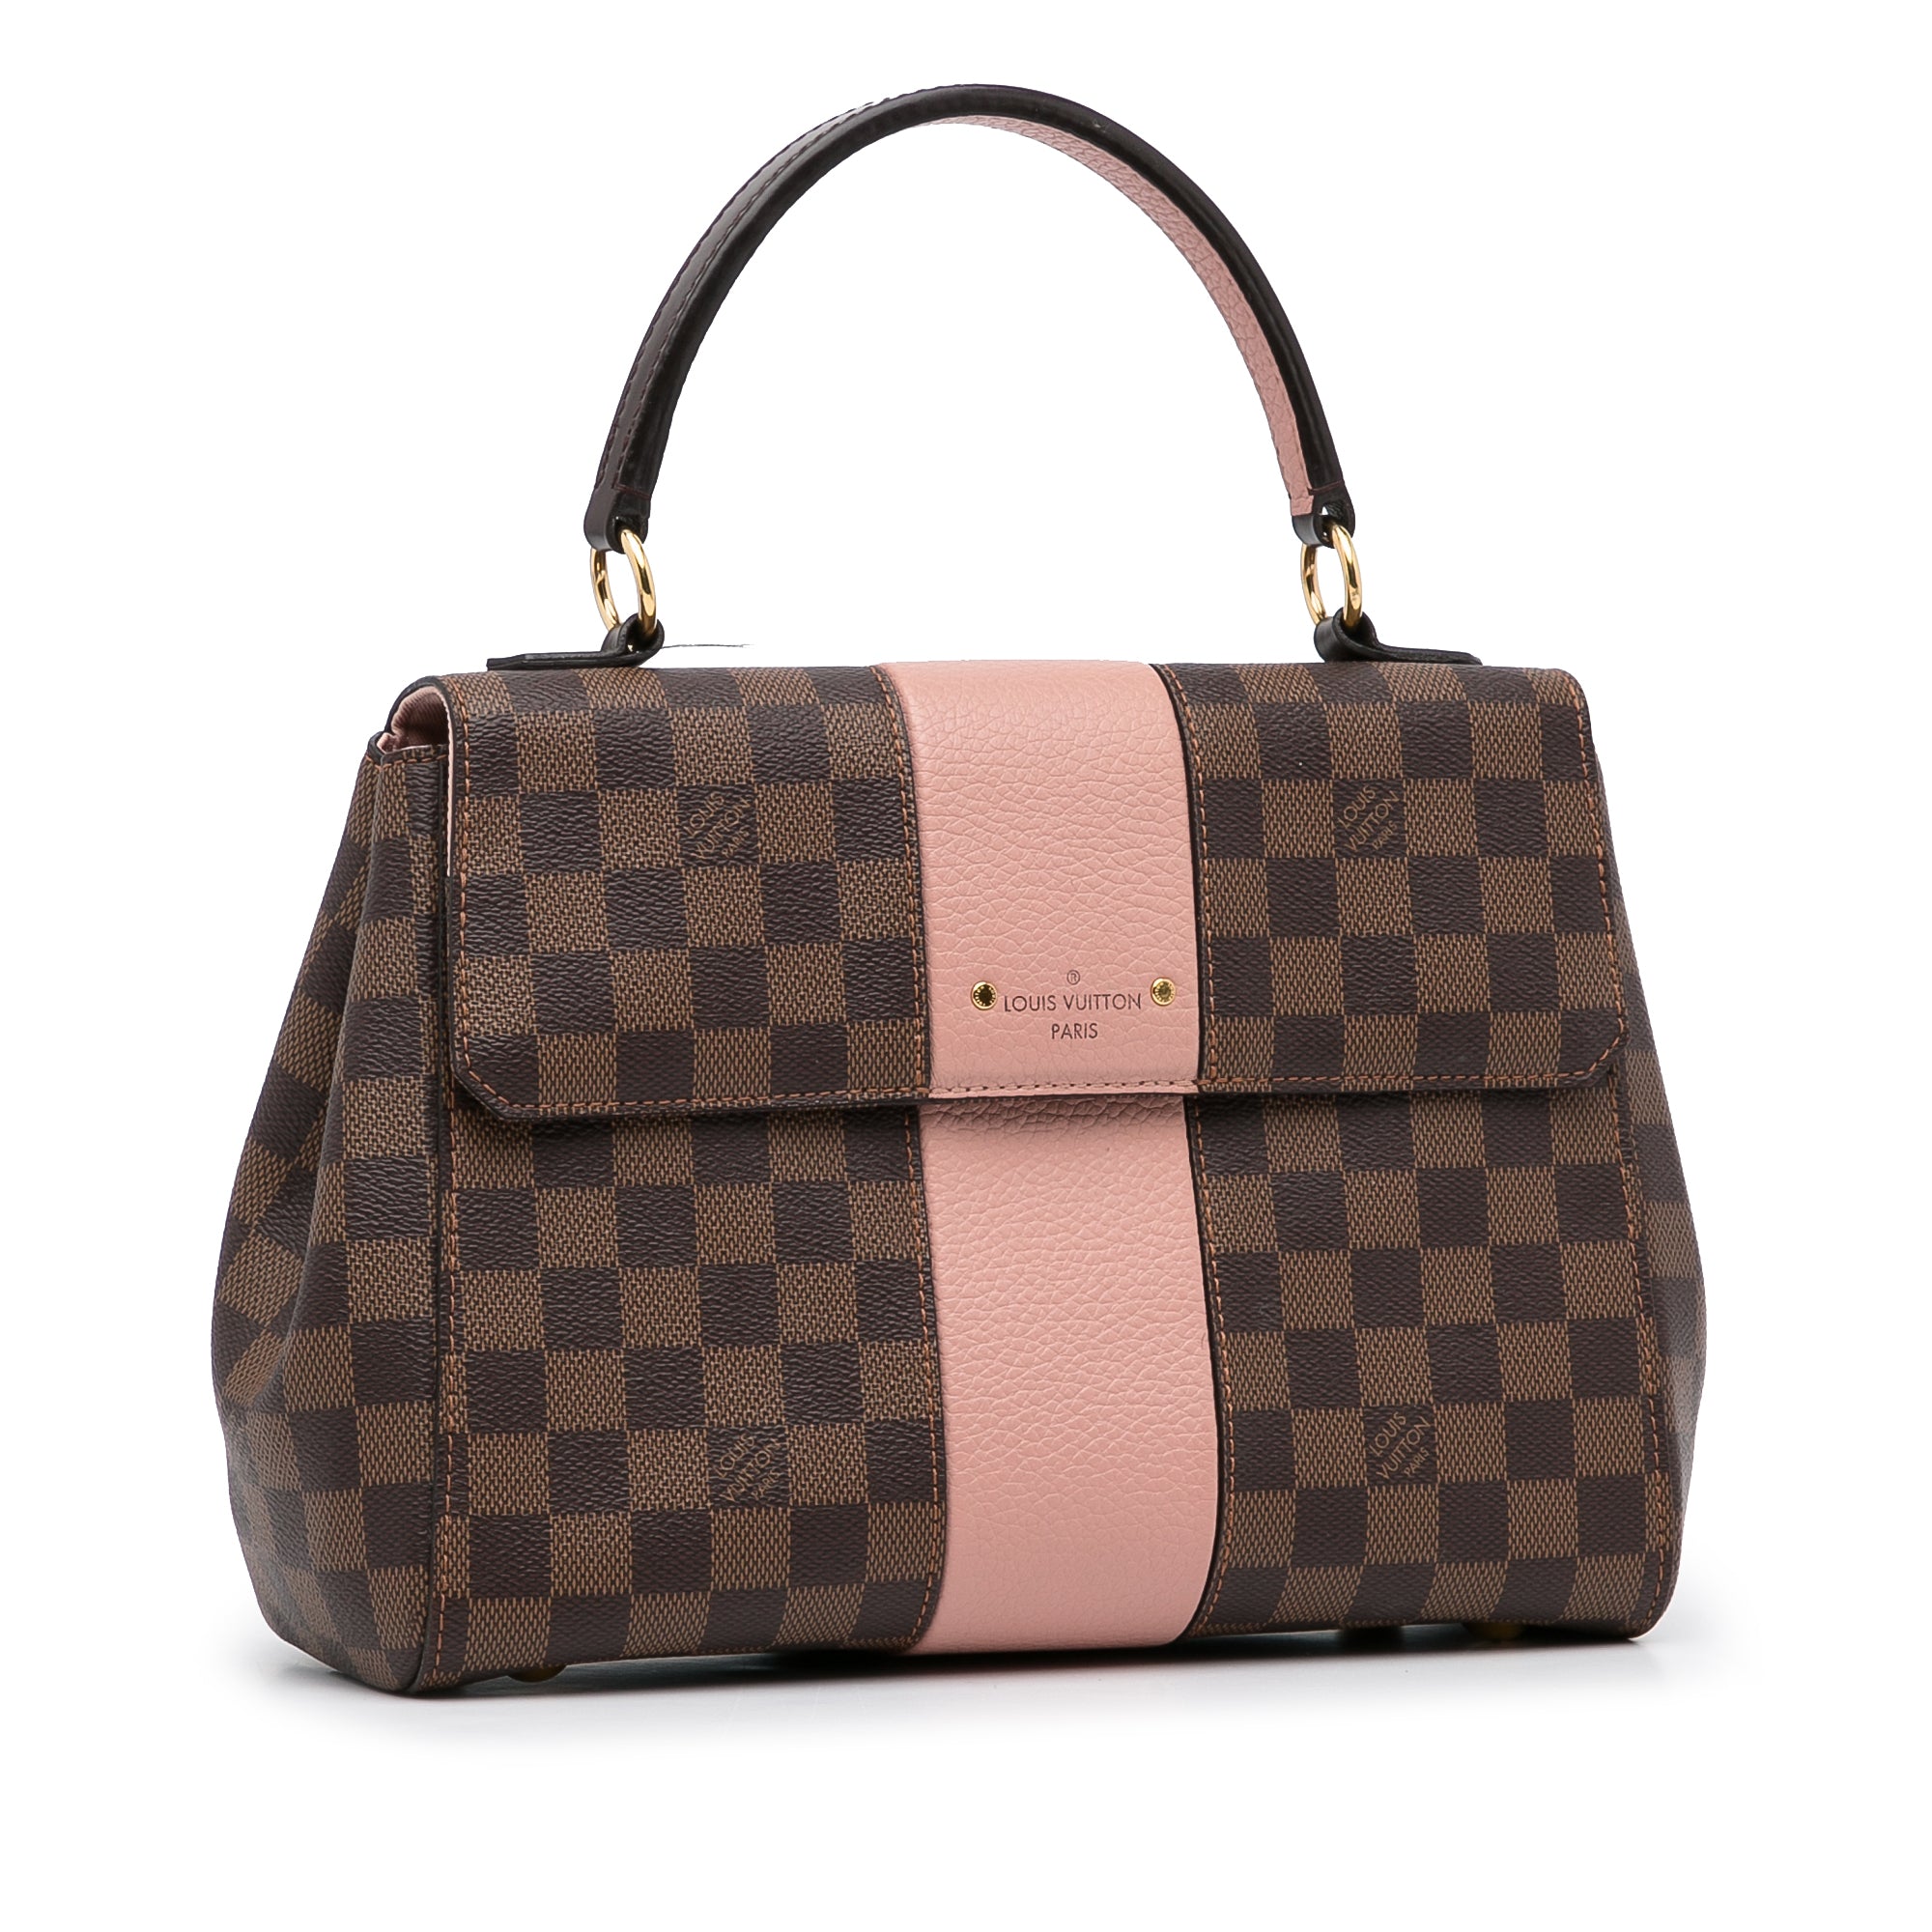 Louis Vuitton - Authenticated  Handbag - Cloth Brown Plain for Women, Very Good Condition